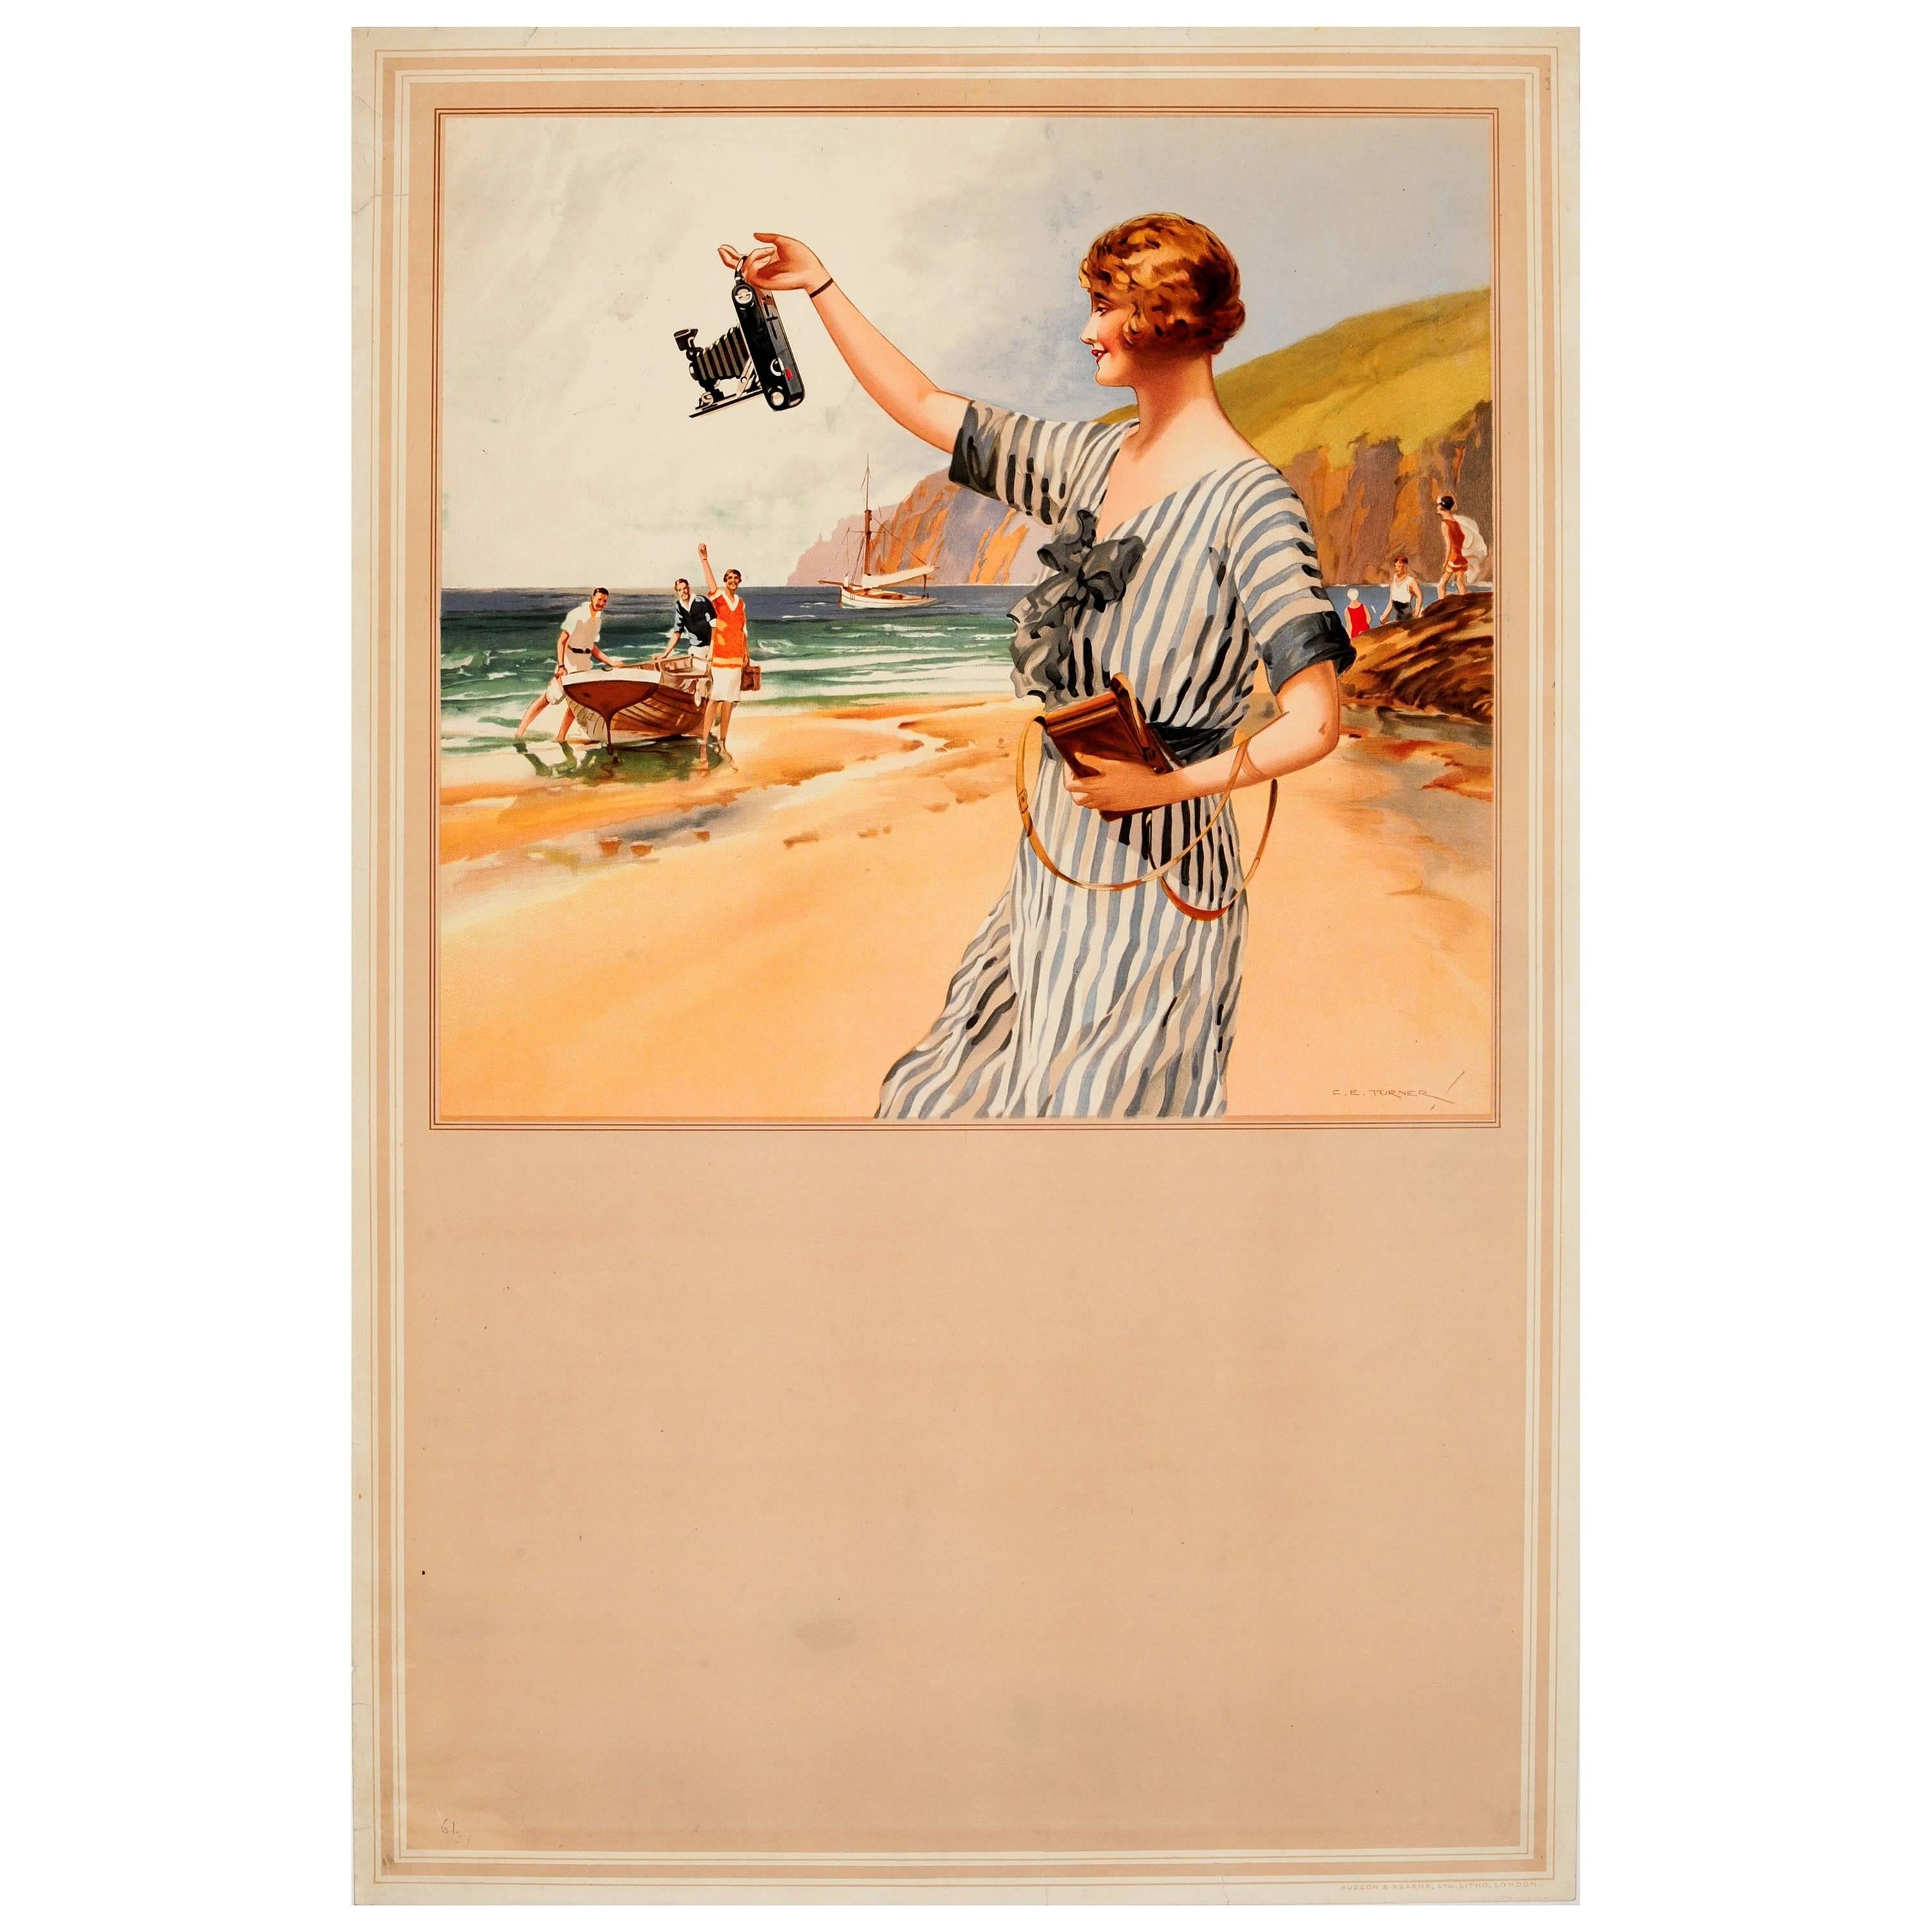 Original Vintage Kodak Camera Advertising Poster ft. Summer Beach Scene Painting